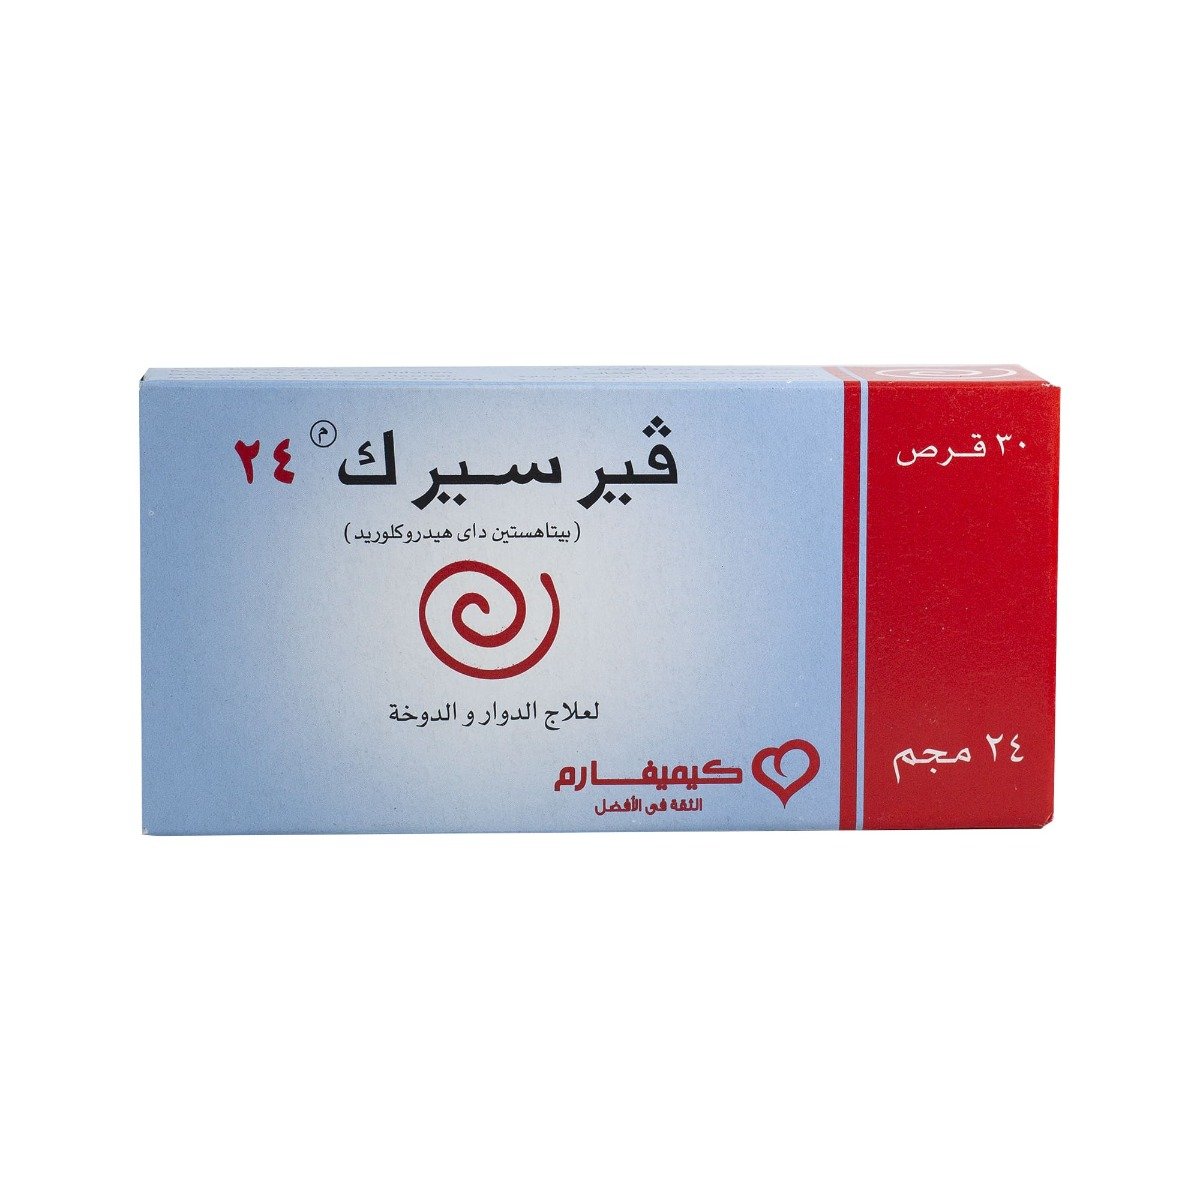 Verserc 24 mg - 30 Tablets - Bloom Pharmacy